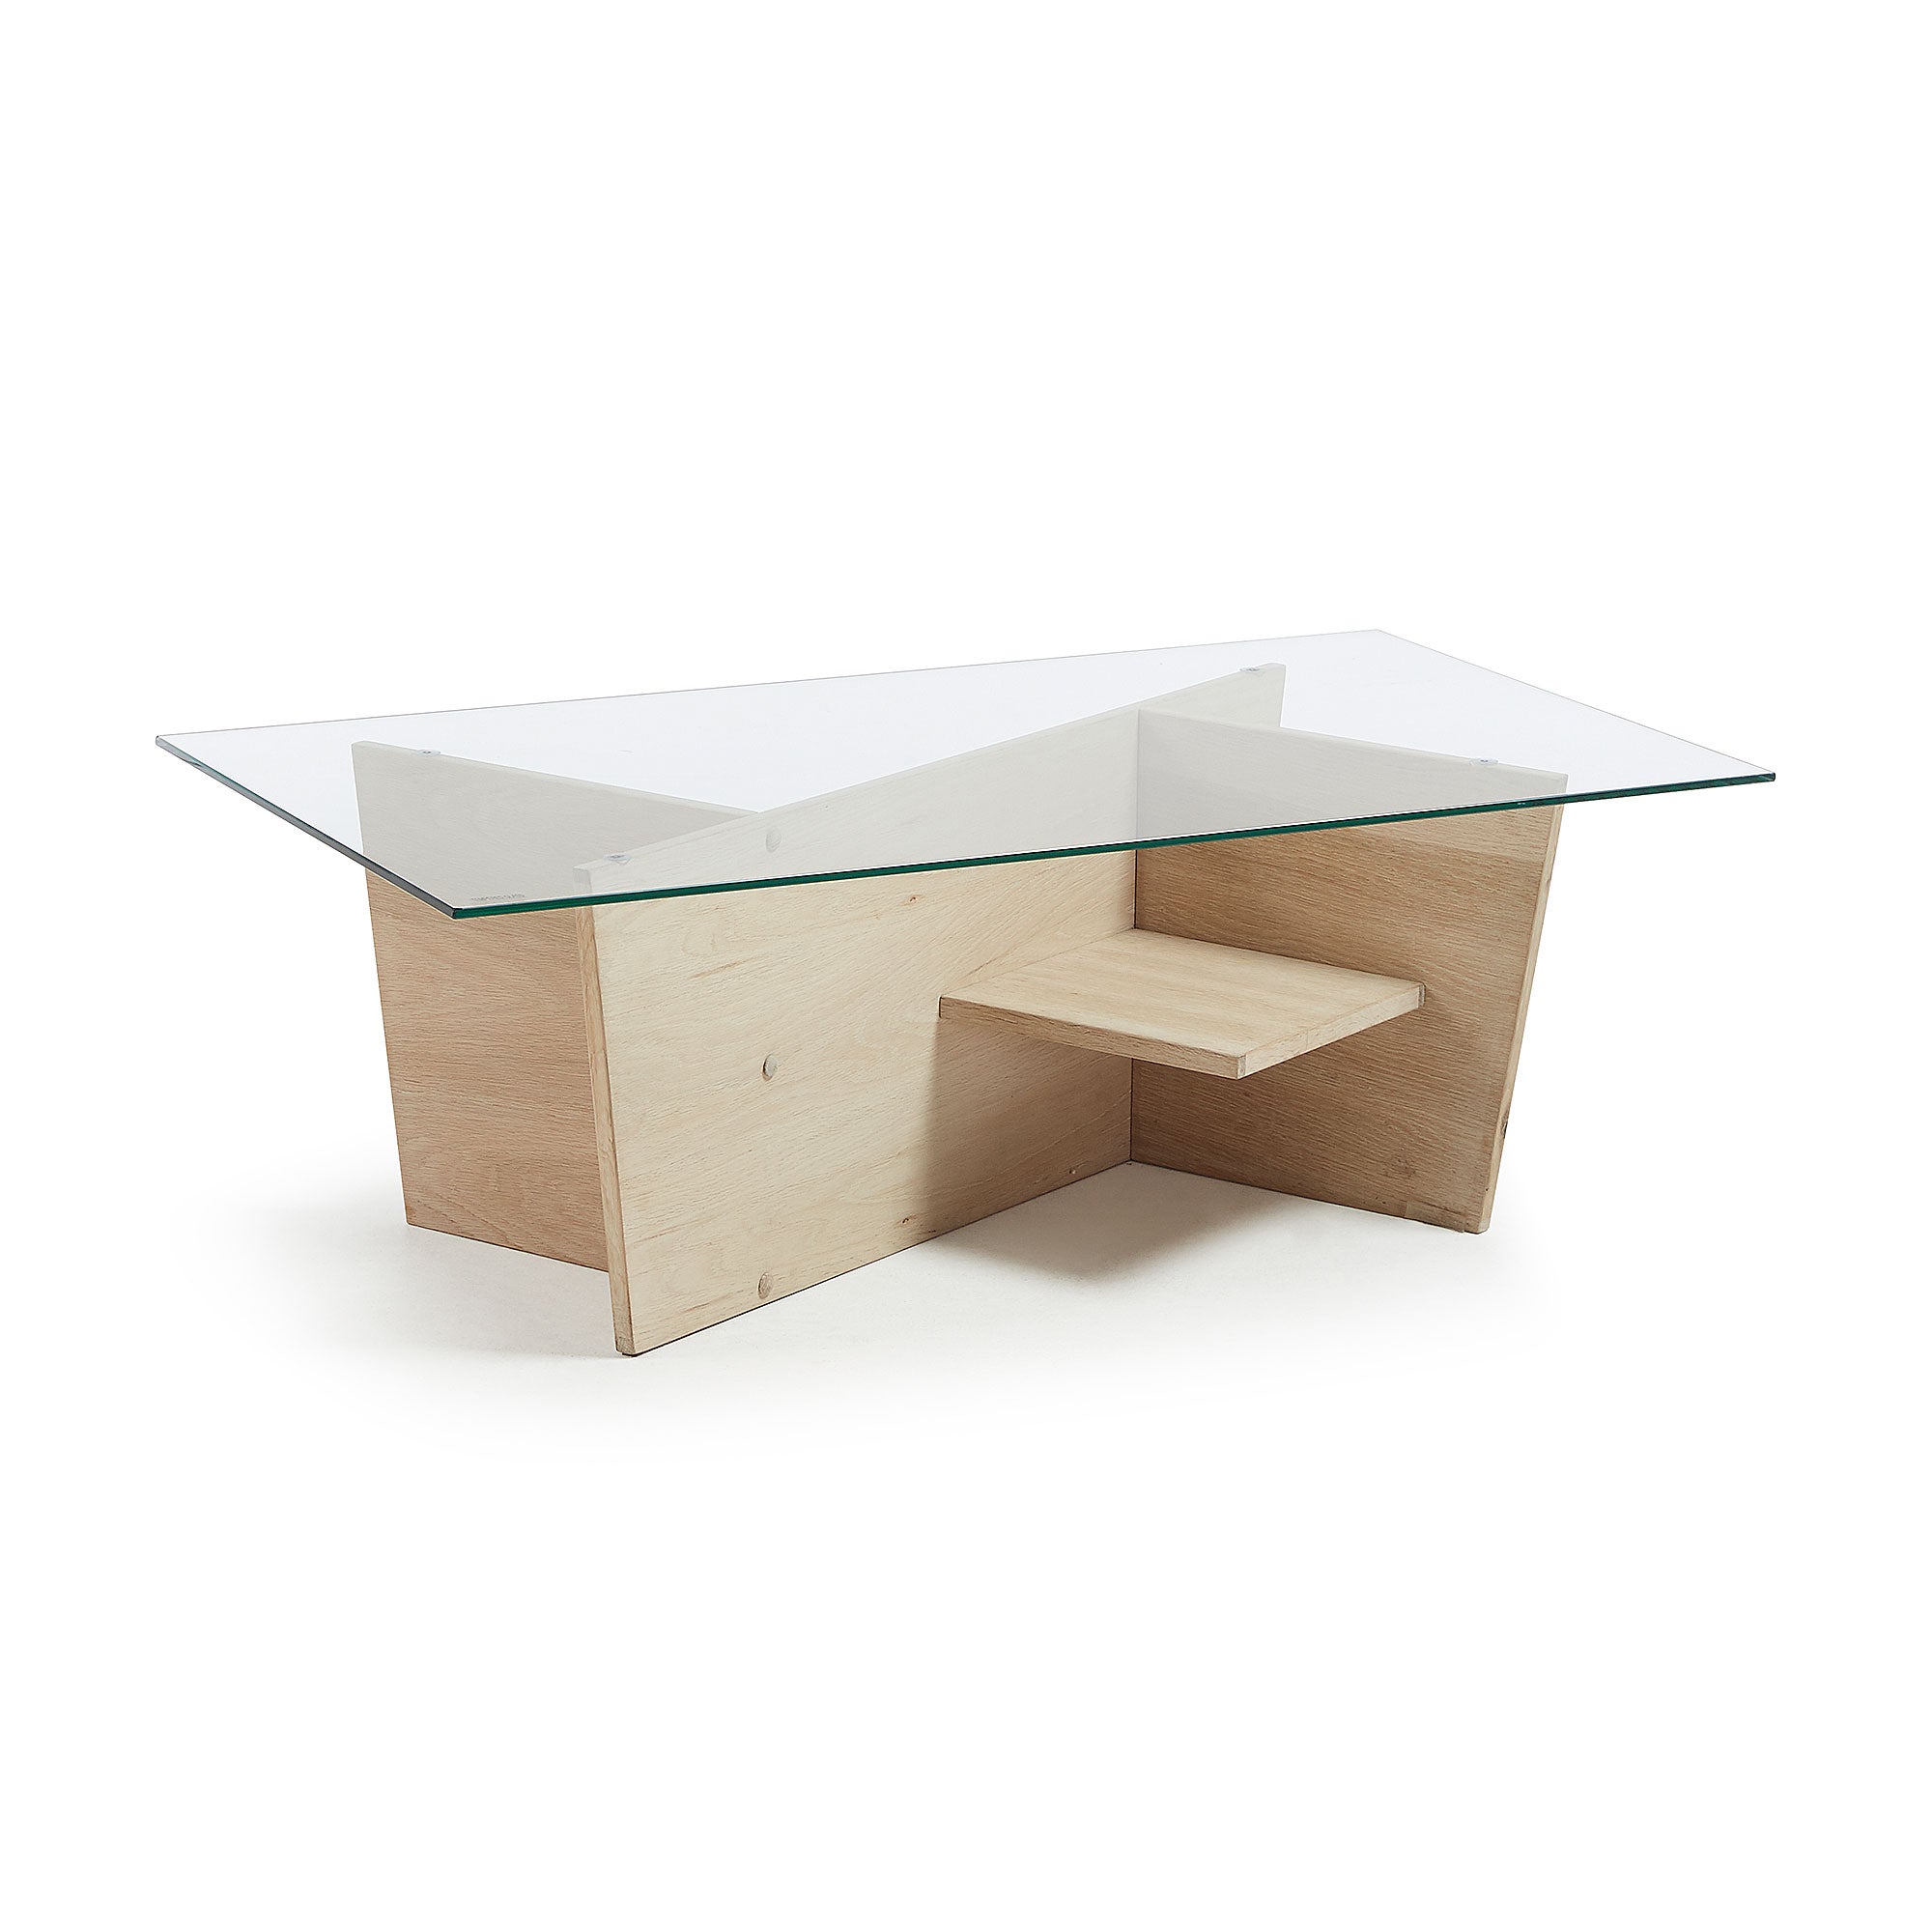 Balwind coffee table, 110 x 60 cm